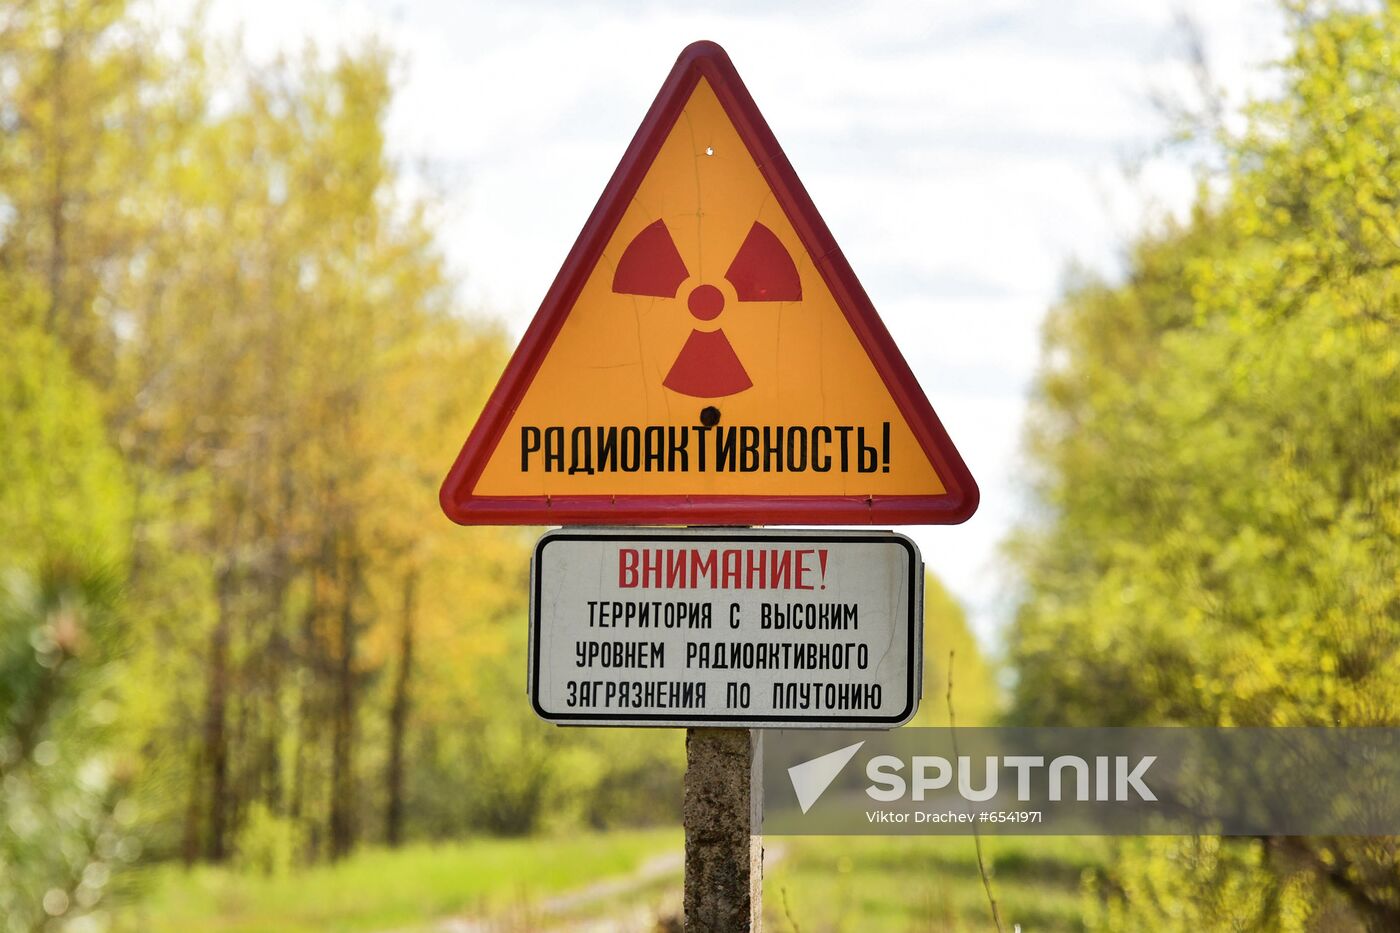 Belarus Chernobyl Exclusion Zone